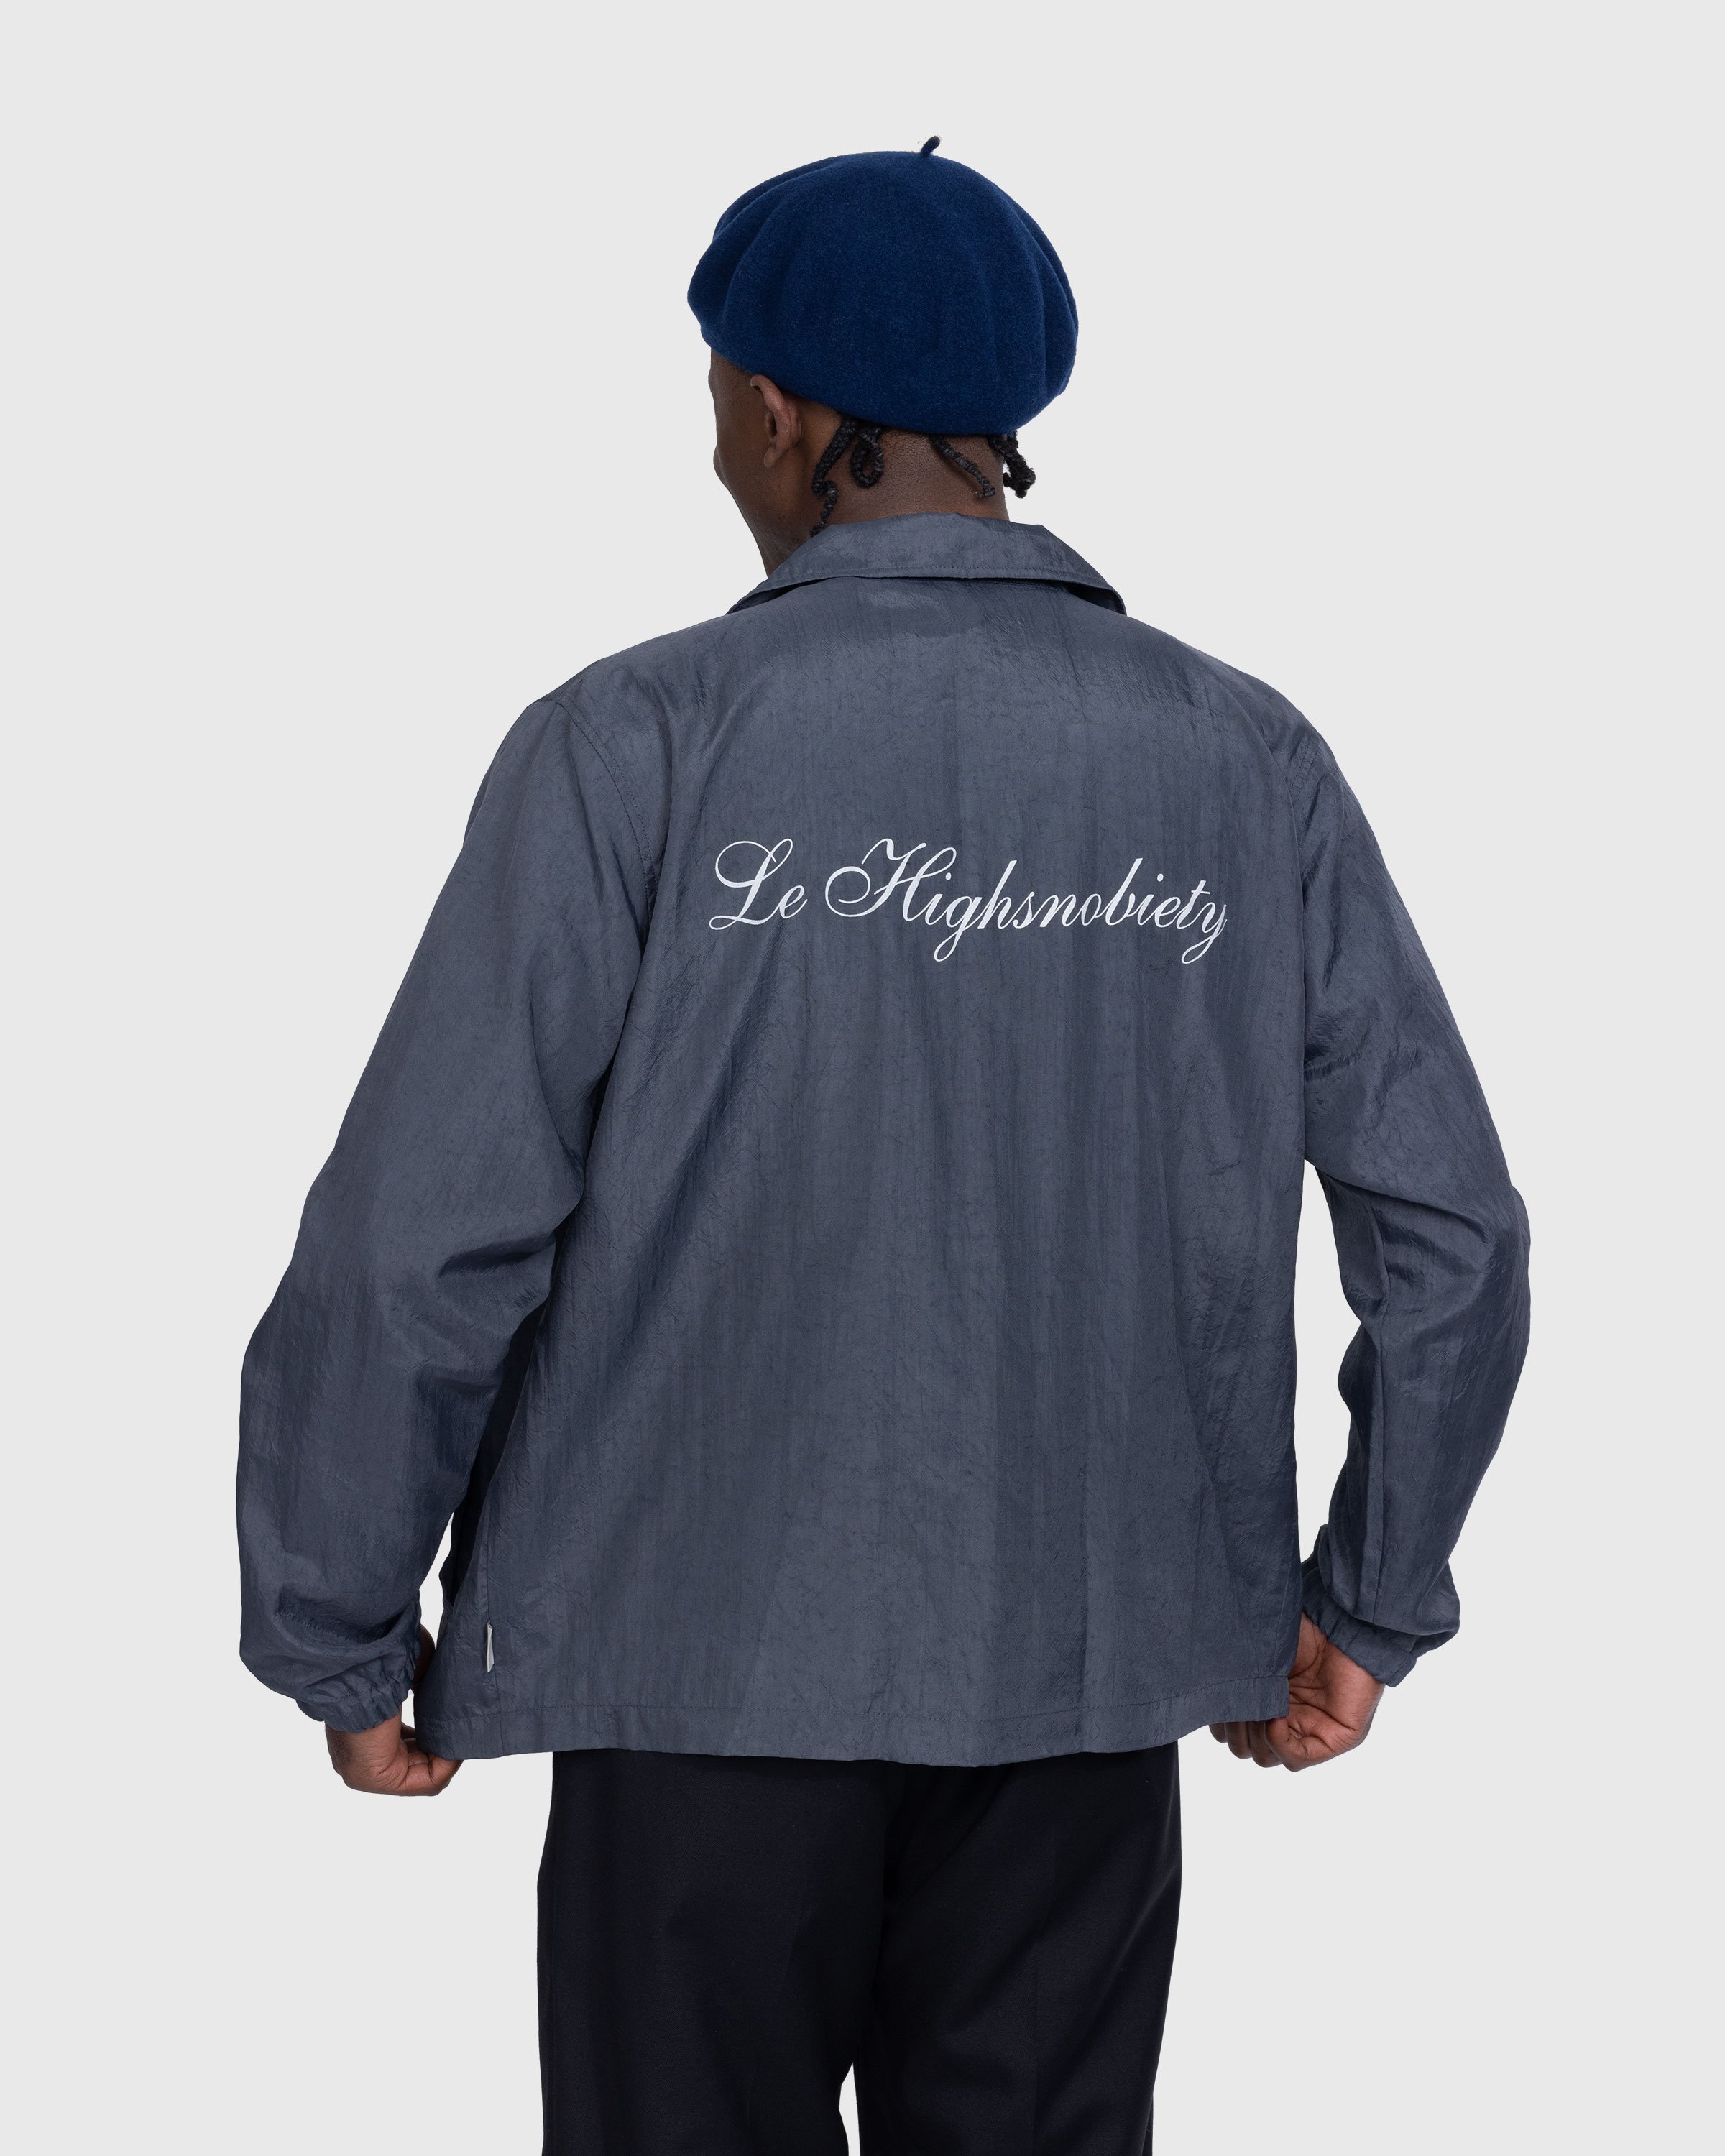 Highsnobiety - Not in Paris 5 Coach Jacket - Clothing - Grey - Image 4